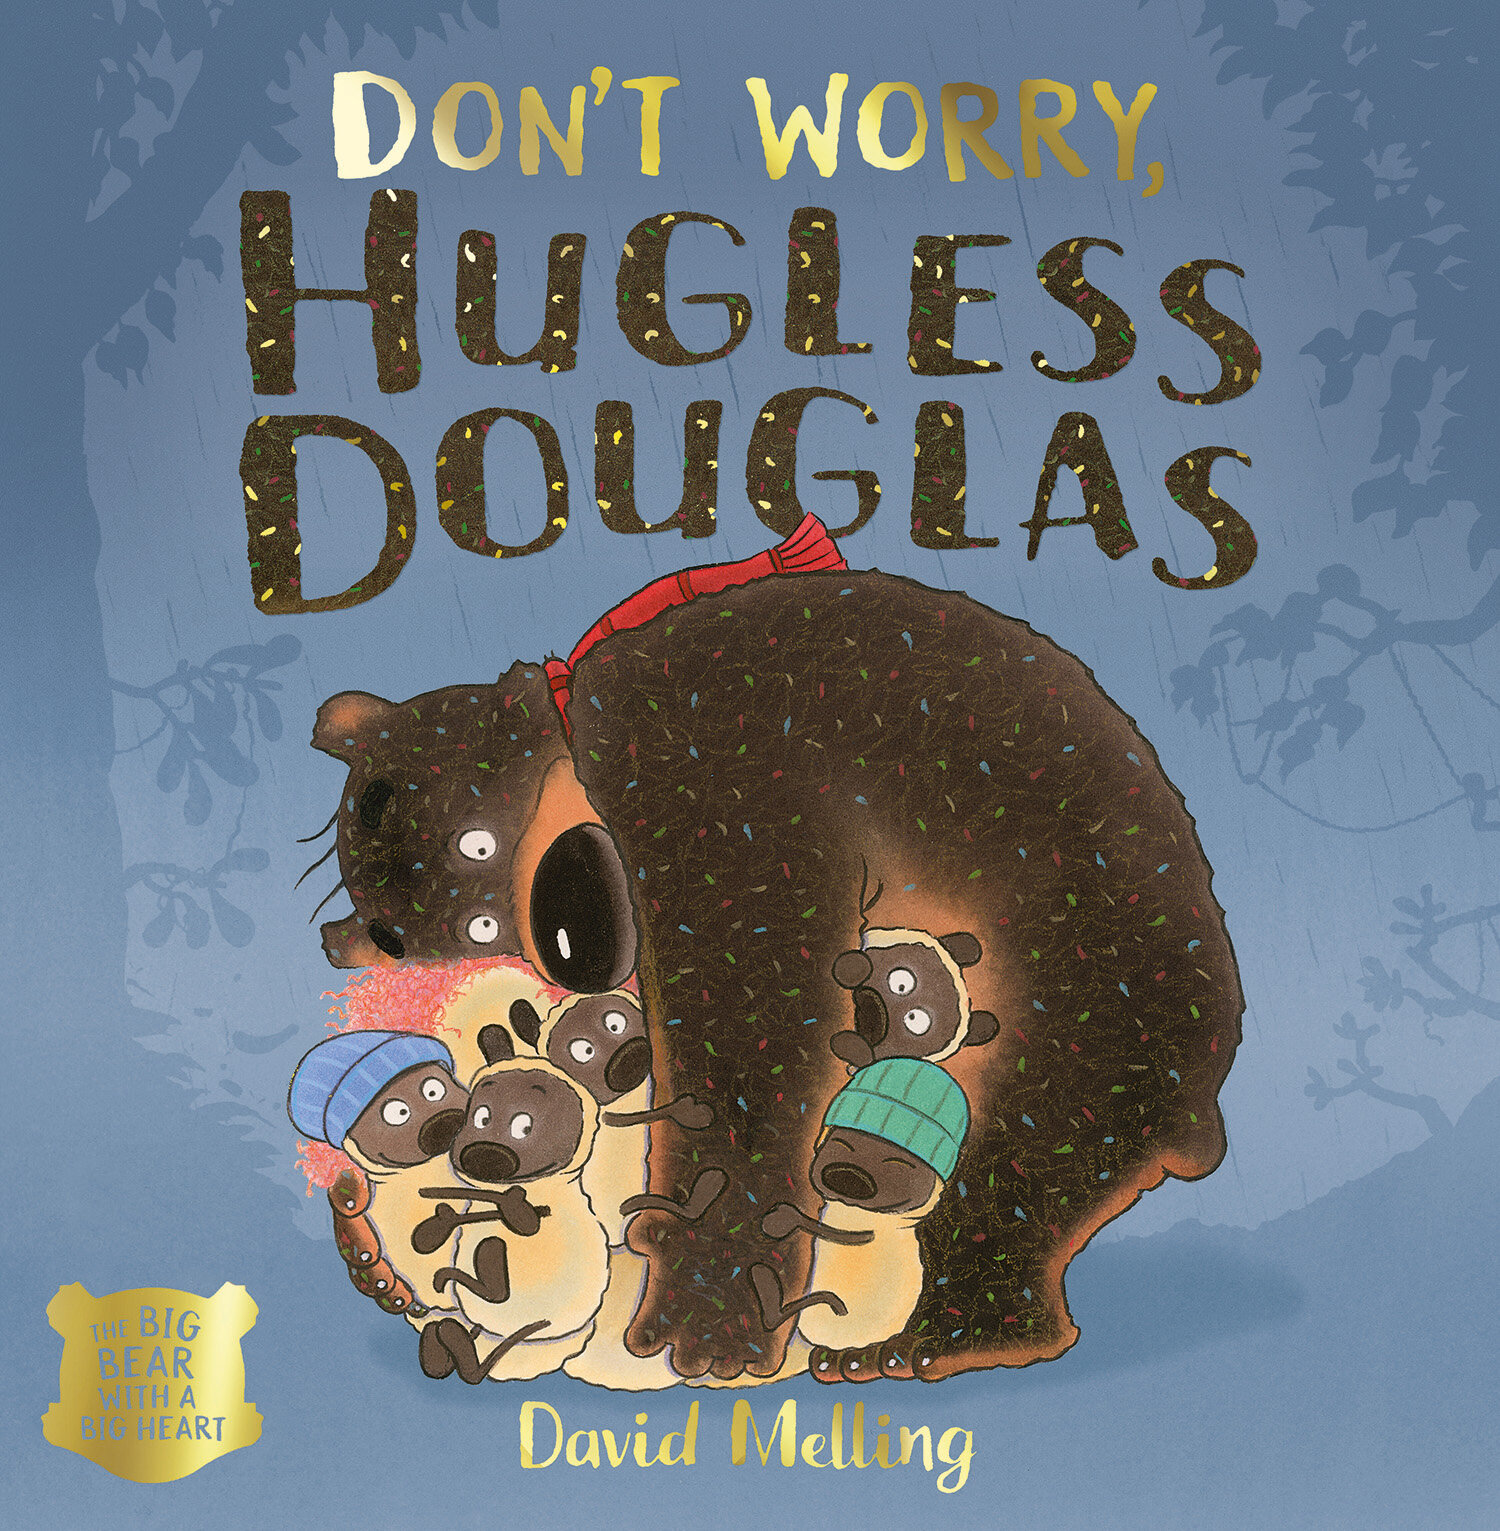 Don't Worry Hugless Douglas